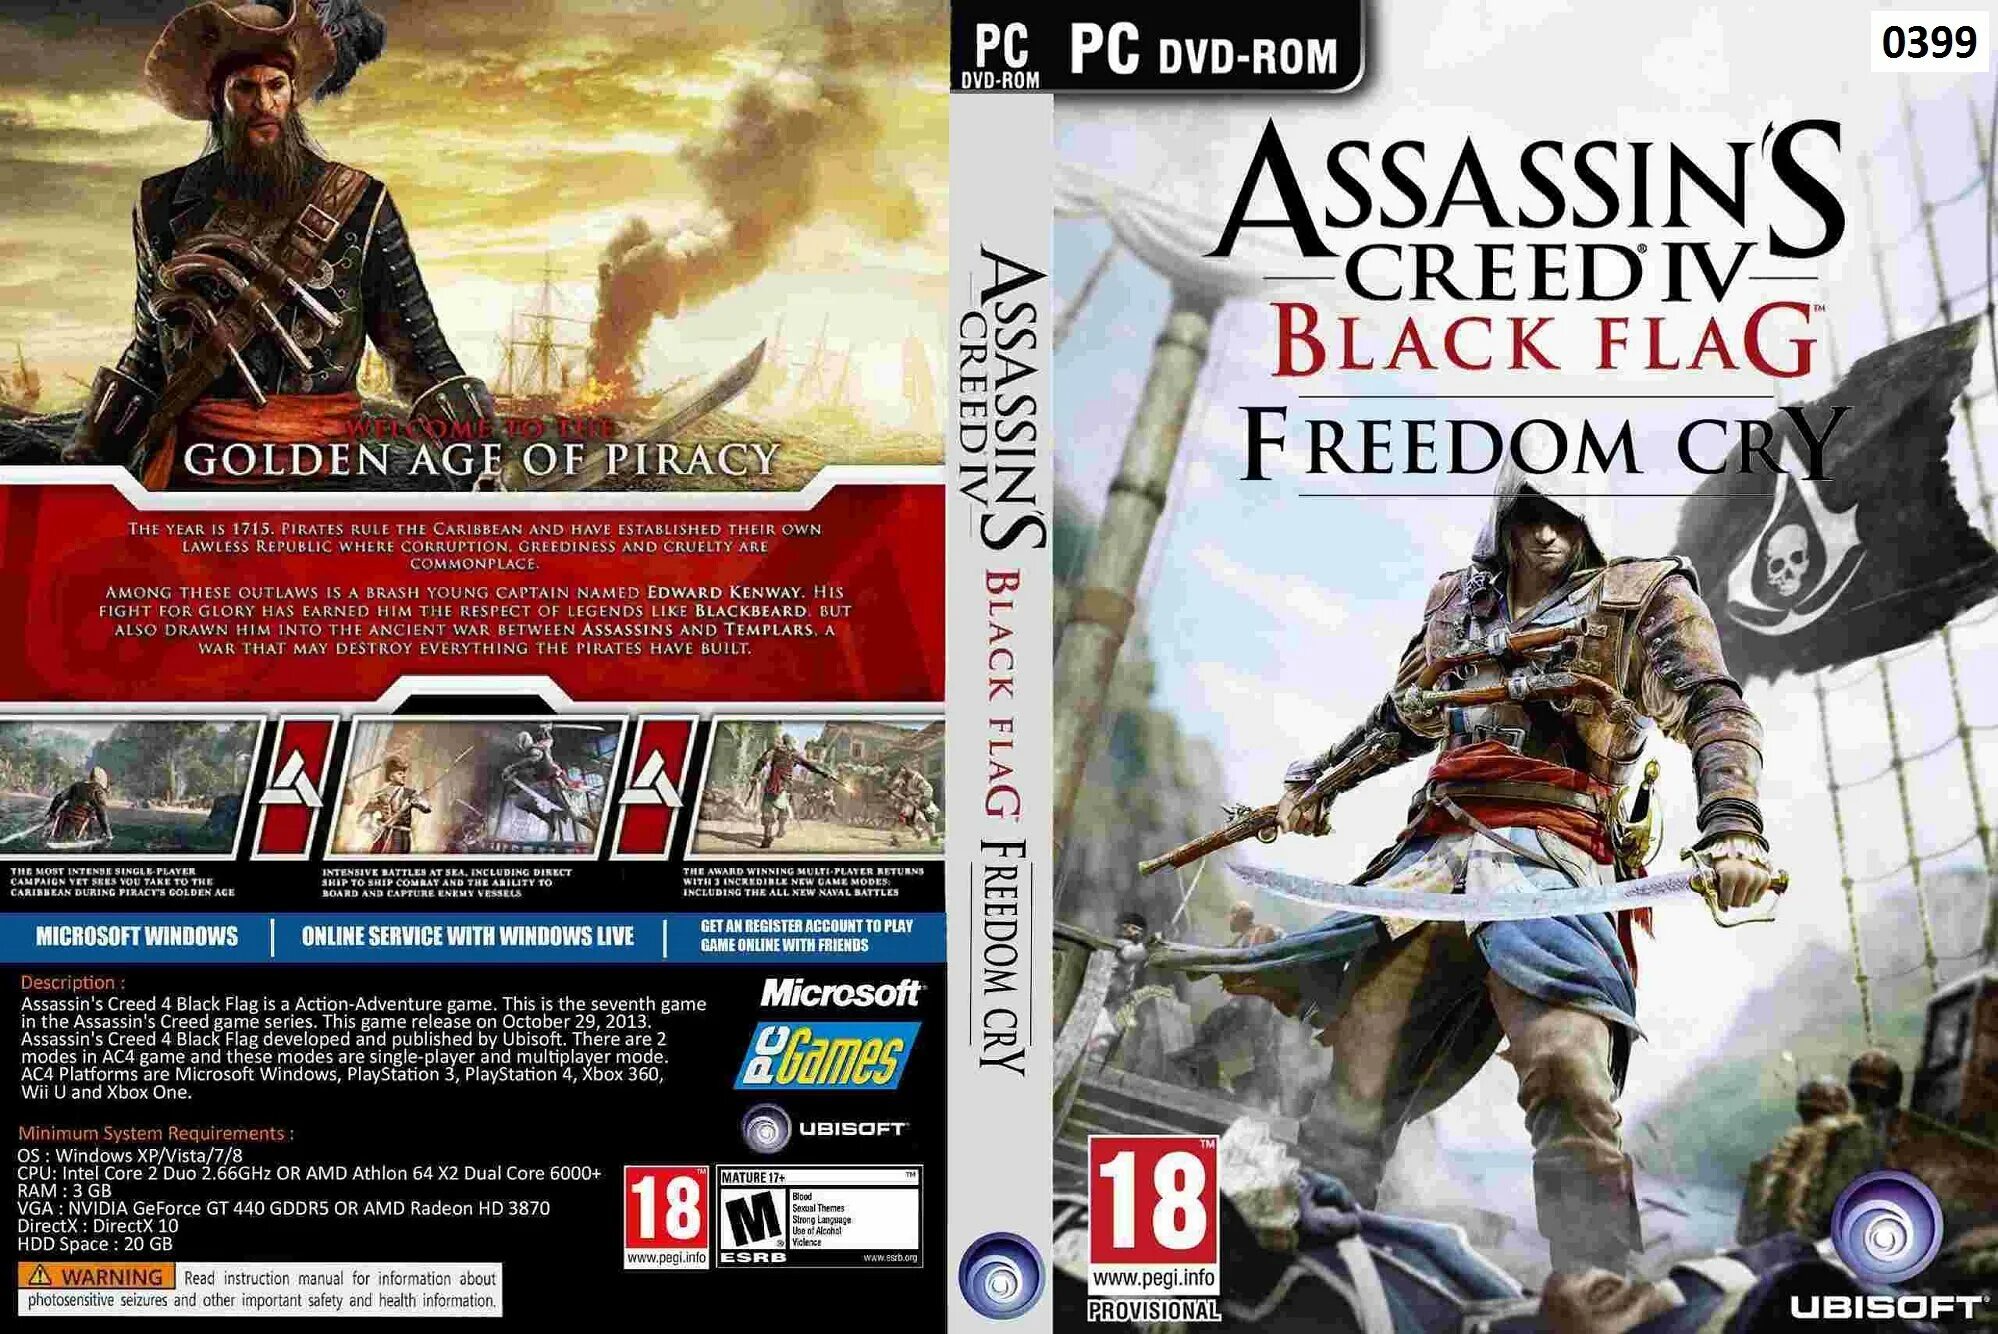 Assassins Creed 4 ps3 обложка. Диск ассасин Крид 2 ps3. Assassins Creed 2 Xbox 360 пиратский диск. Ассасин Крид 3 диск. Читы черный флаг